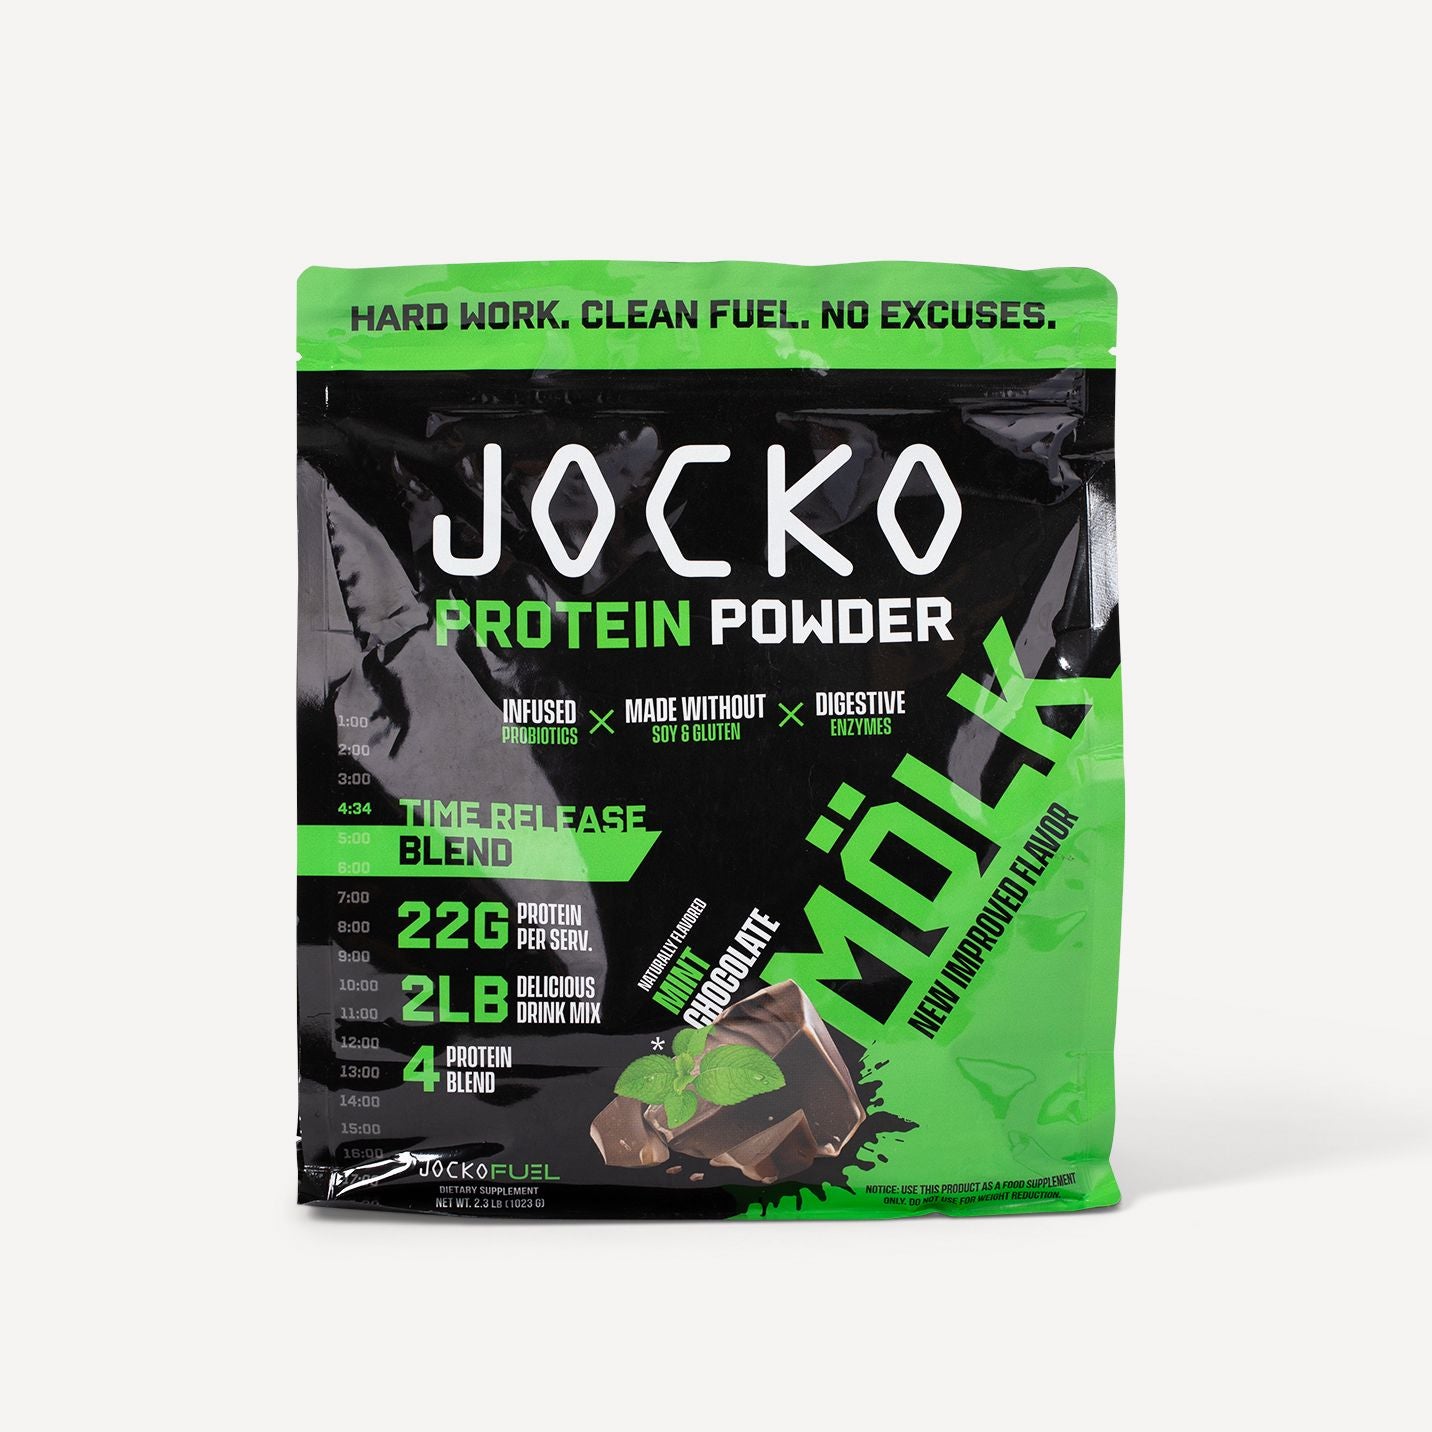 JOCKO MÖLK PROTEIN POWDER – Jocko Fuel